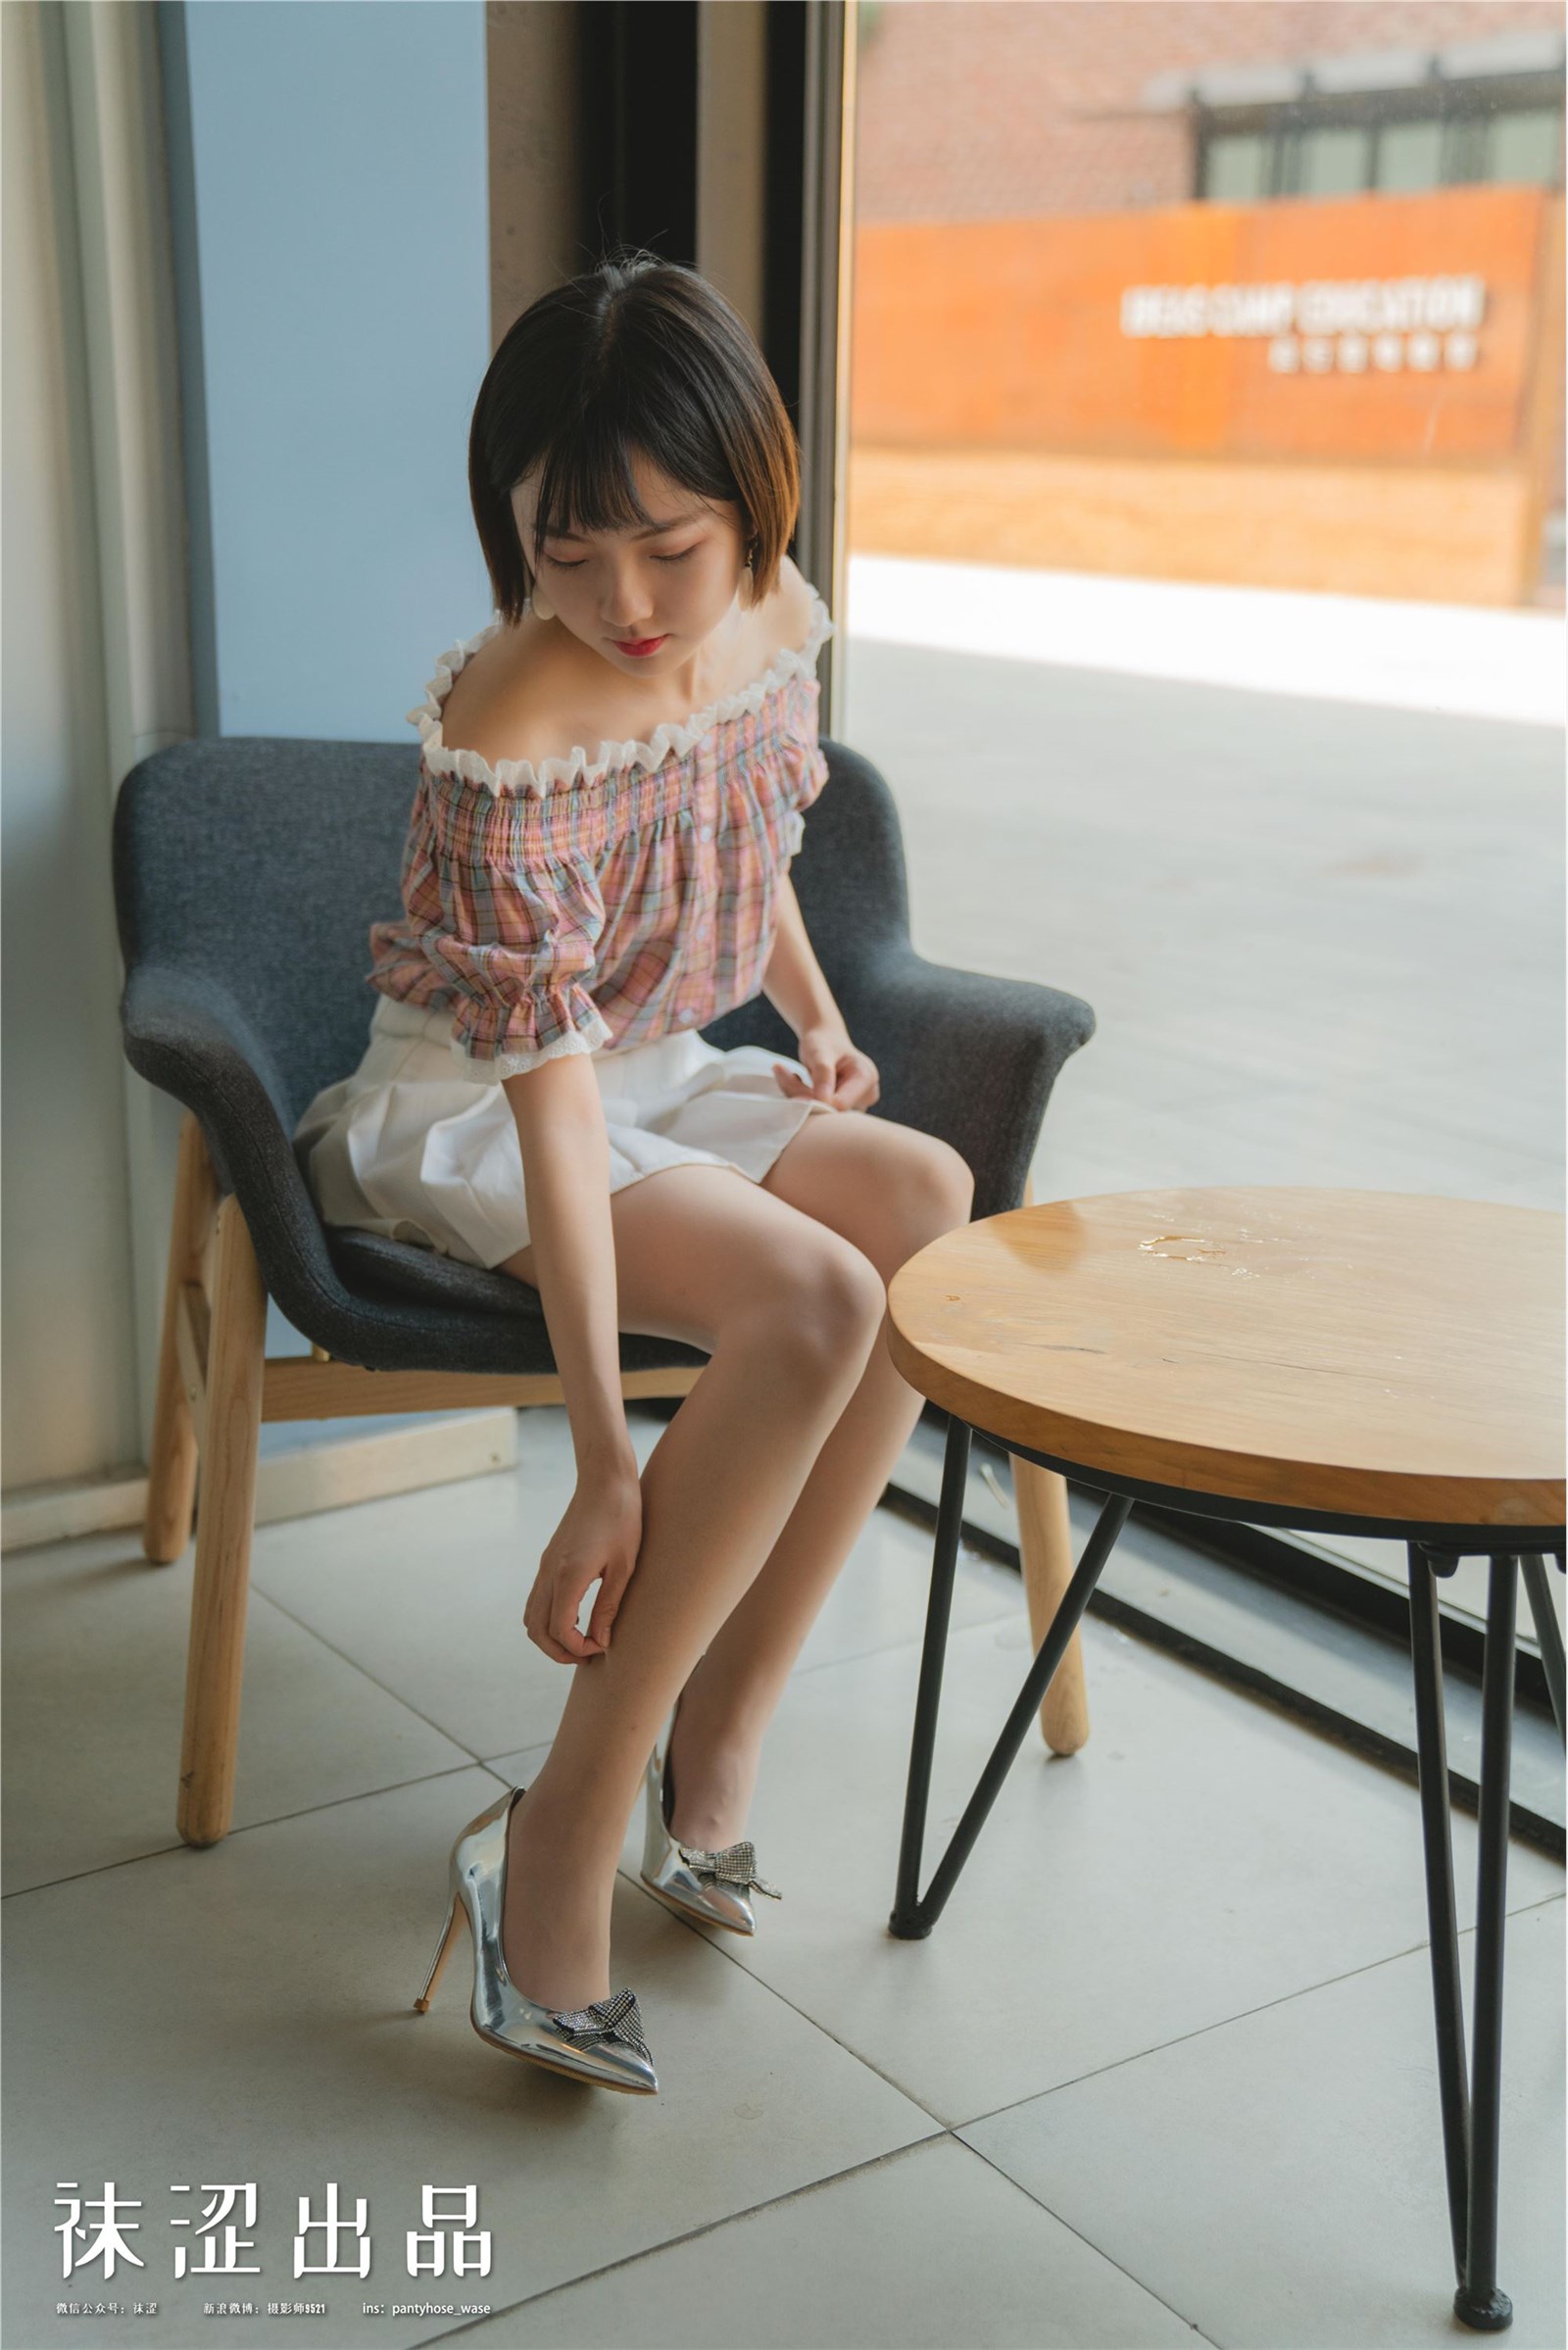 Socks acerbity 076 warm ~ pastoral style pleated skirt(10)